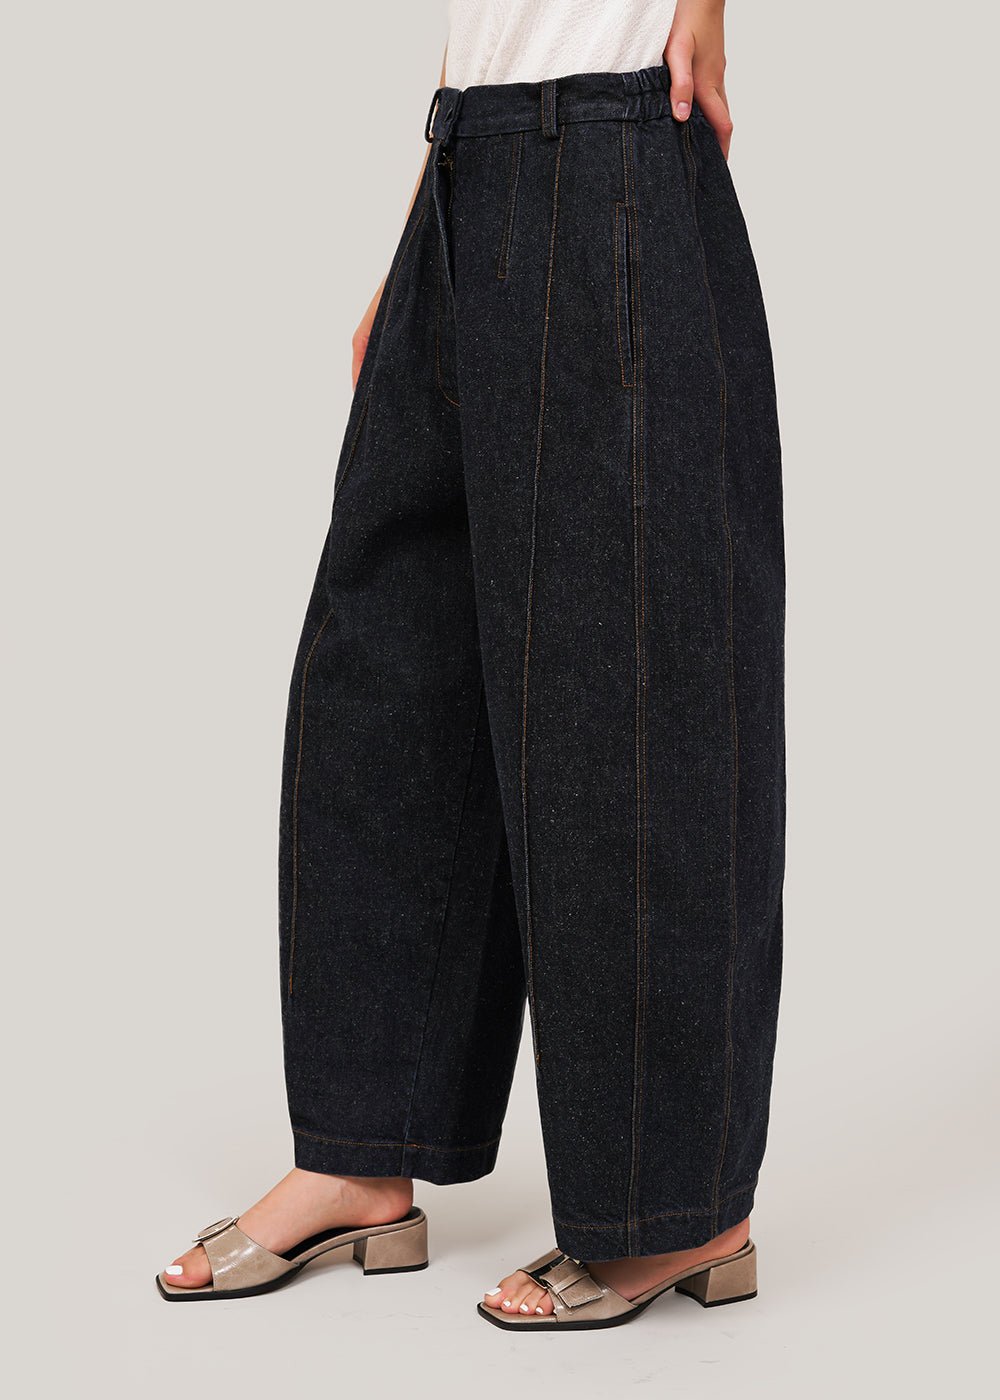 Cordera Dark Navy Seam Curved Denim Pants - New Classics Studios Sustainable Ethical Fashion Canada